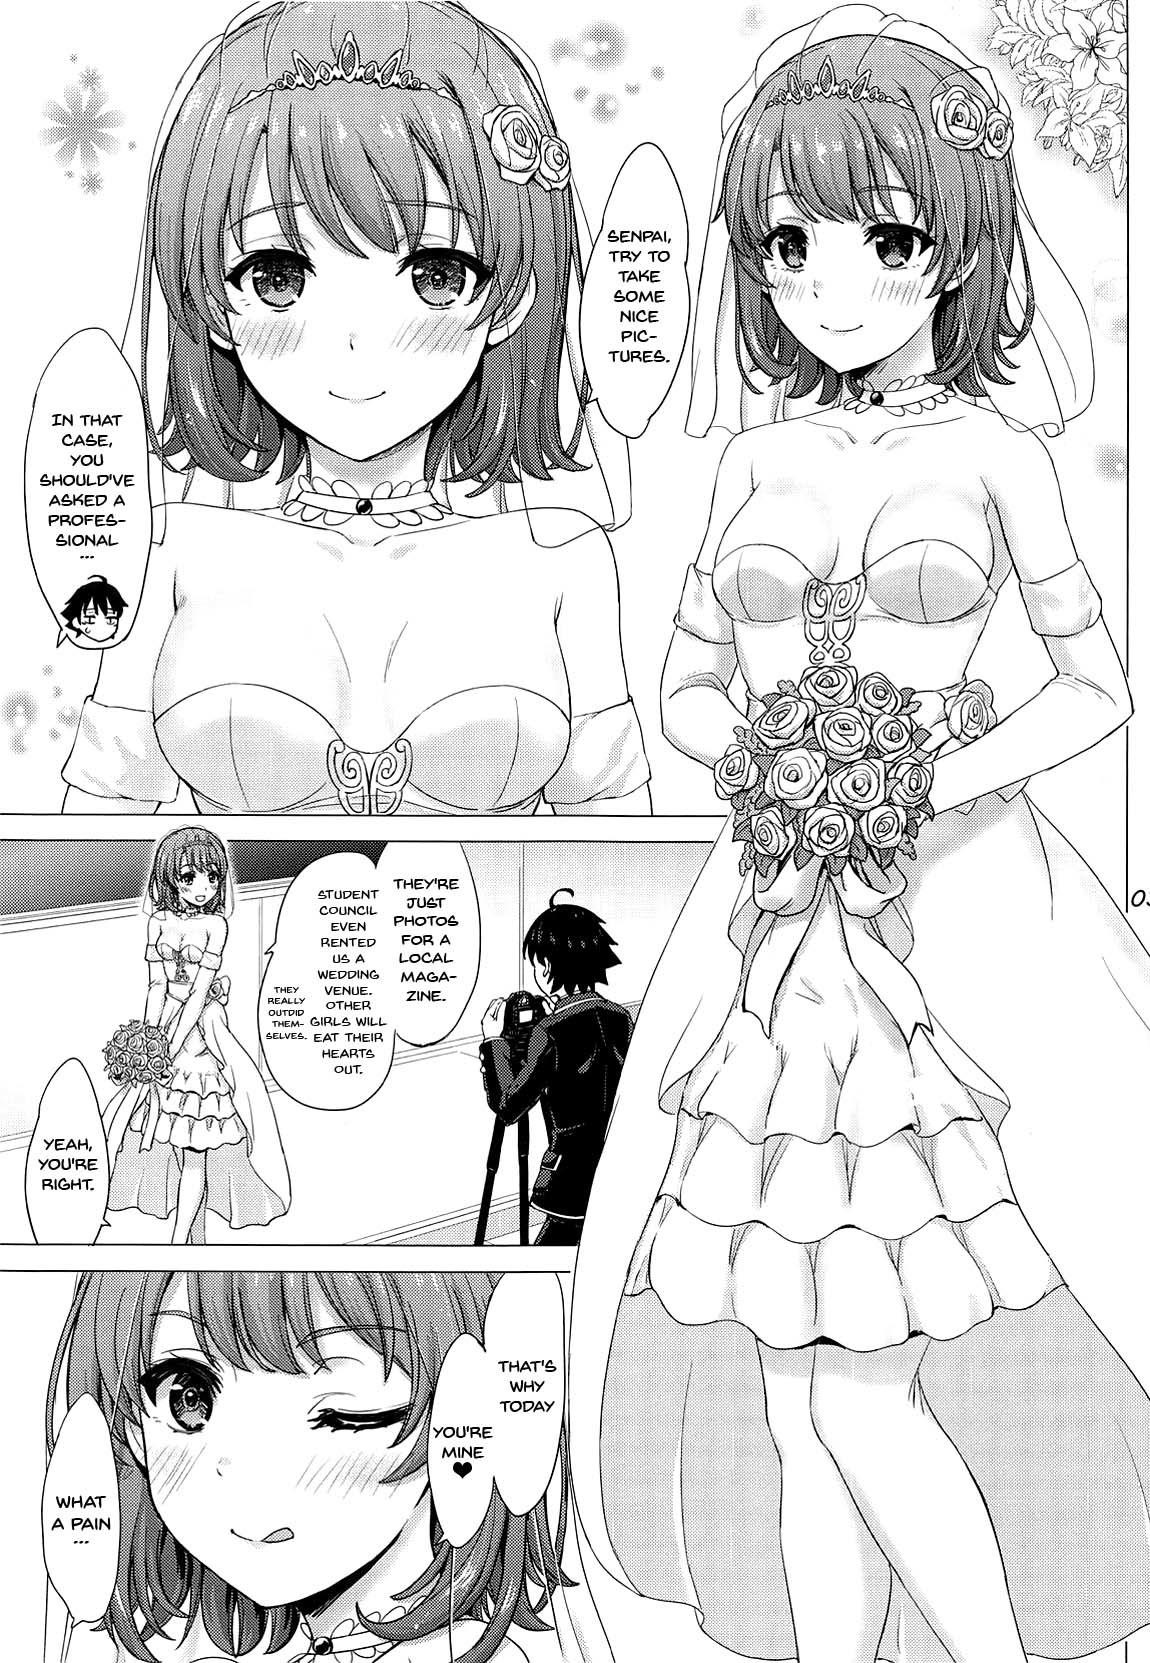 Wedding Irohasu! - Iroha's gonna marry you after today's scholl! 1